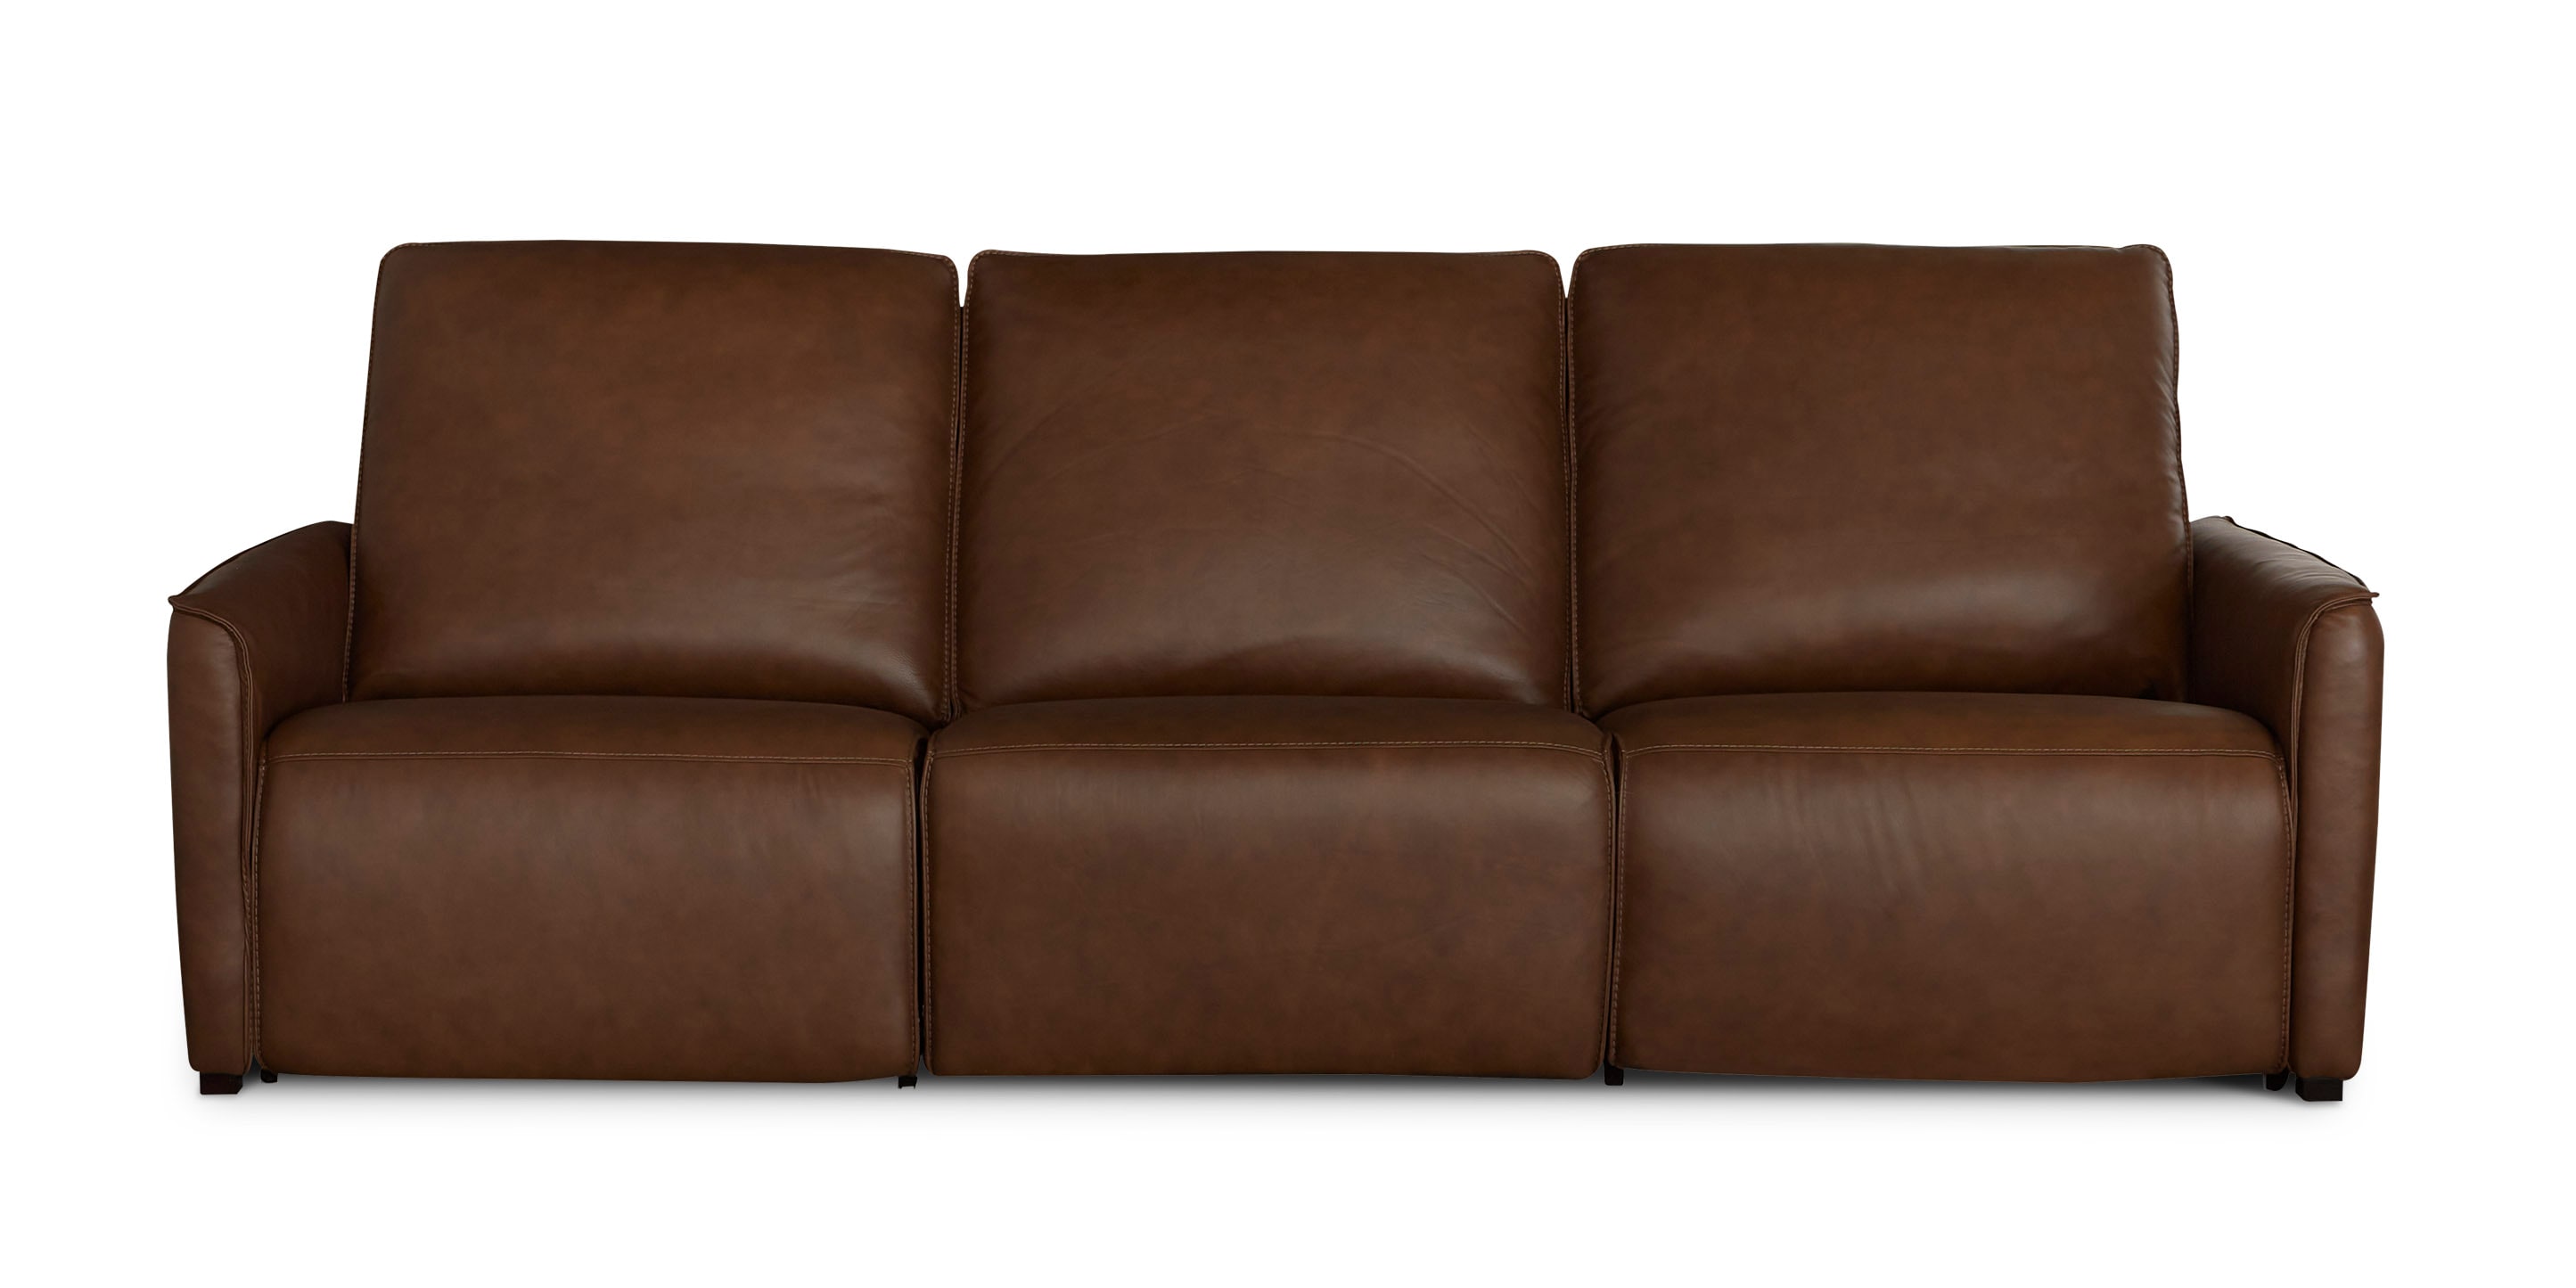 Everett Leather Reclining Sofa